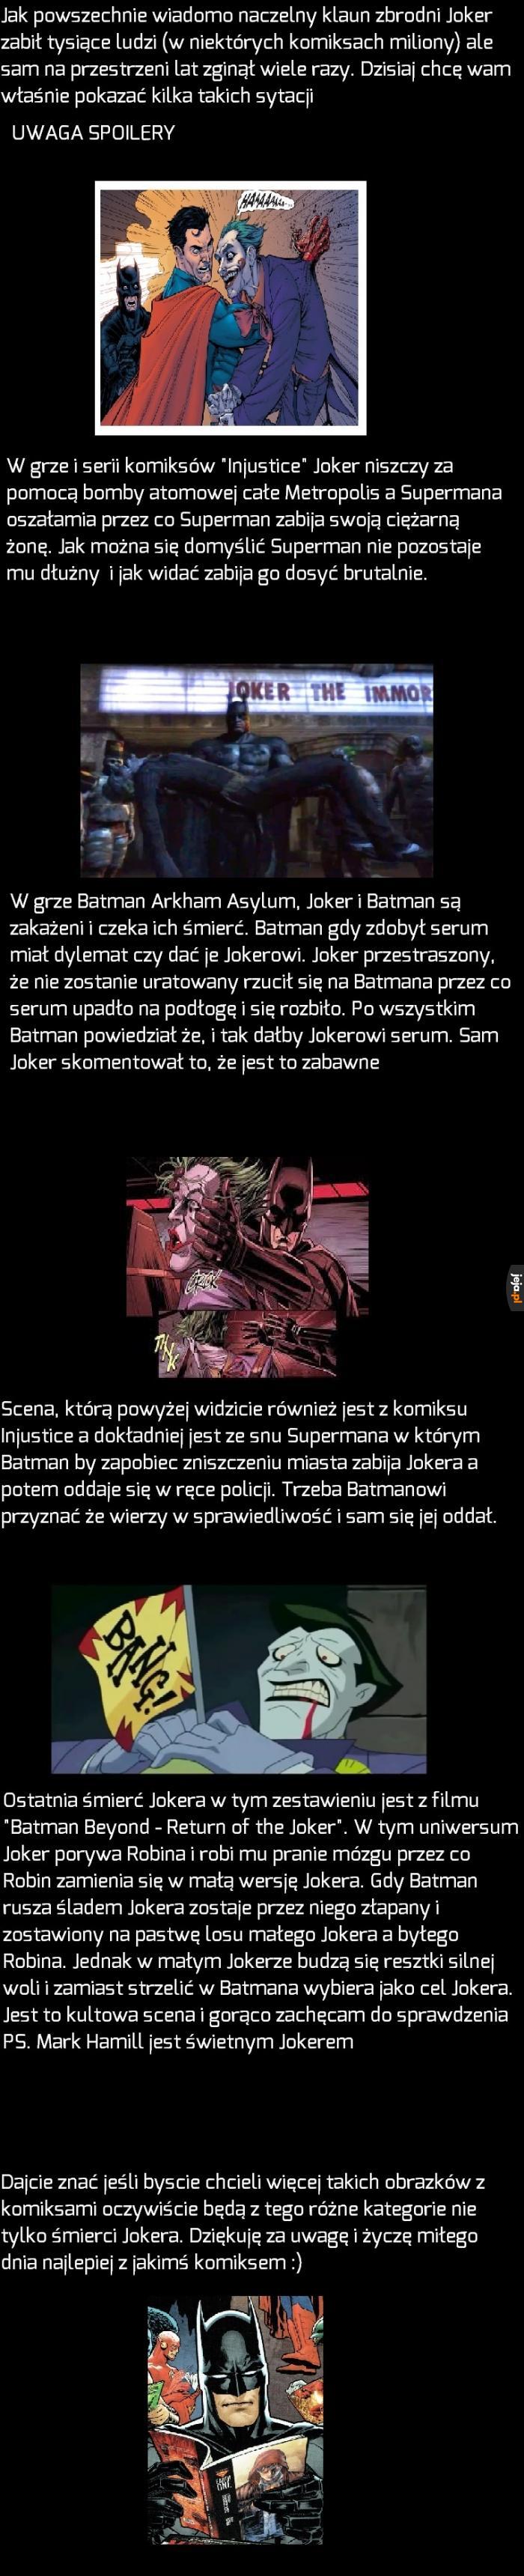 Różne śmierci Jokera